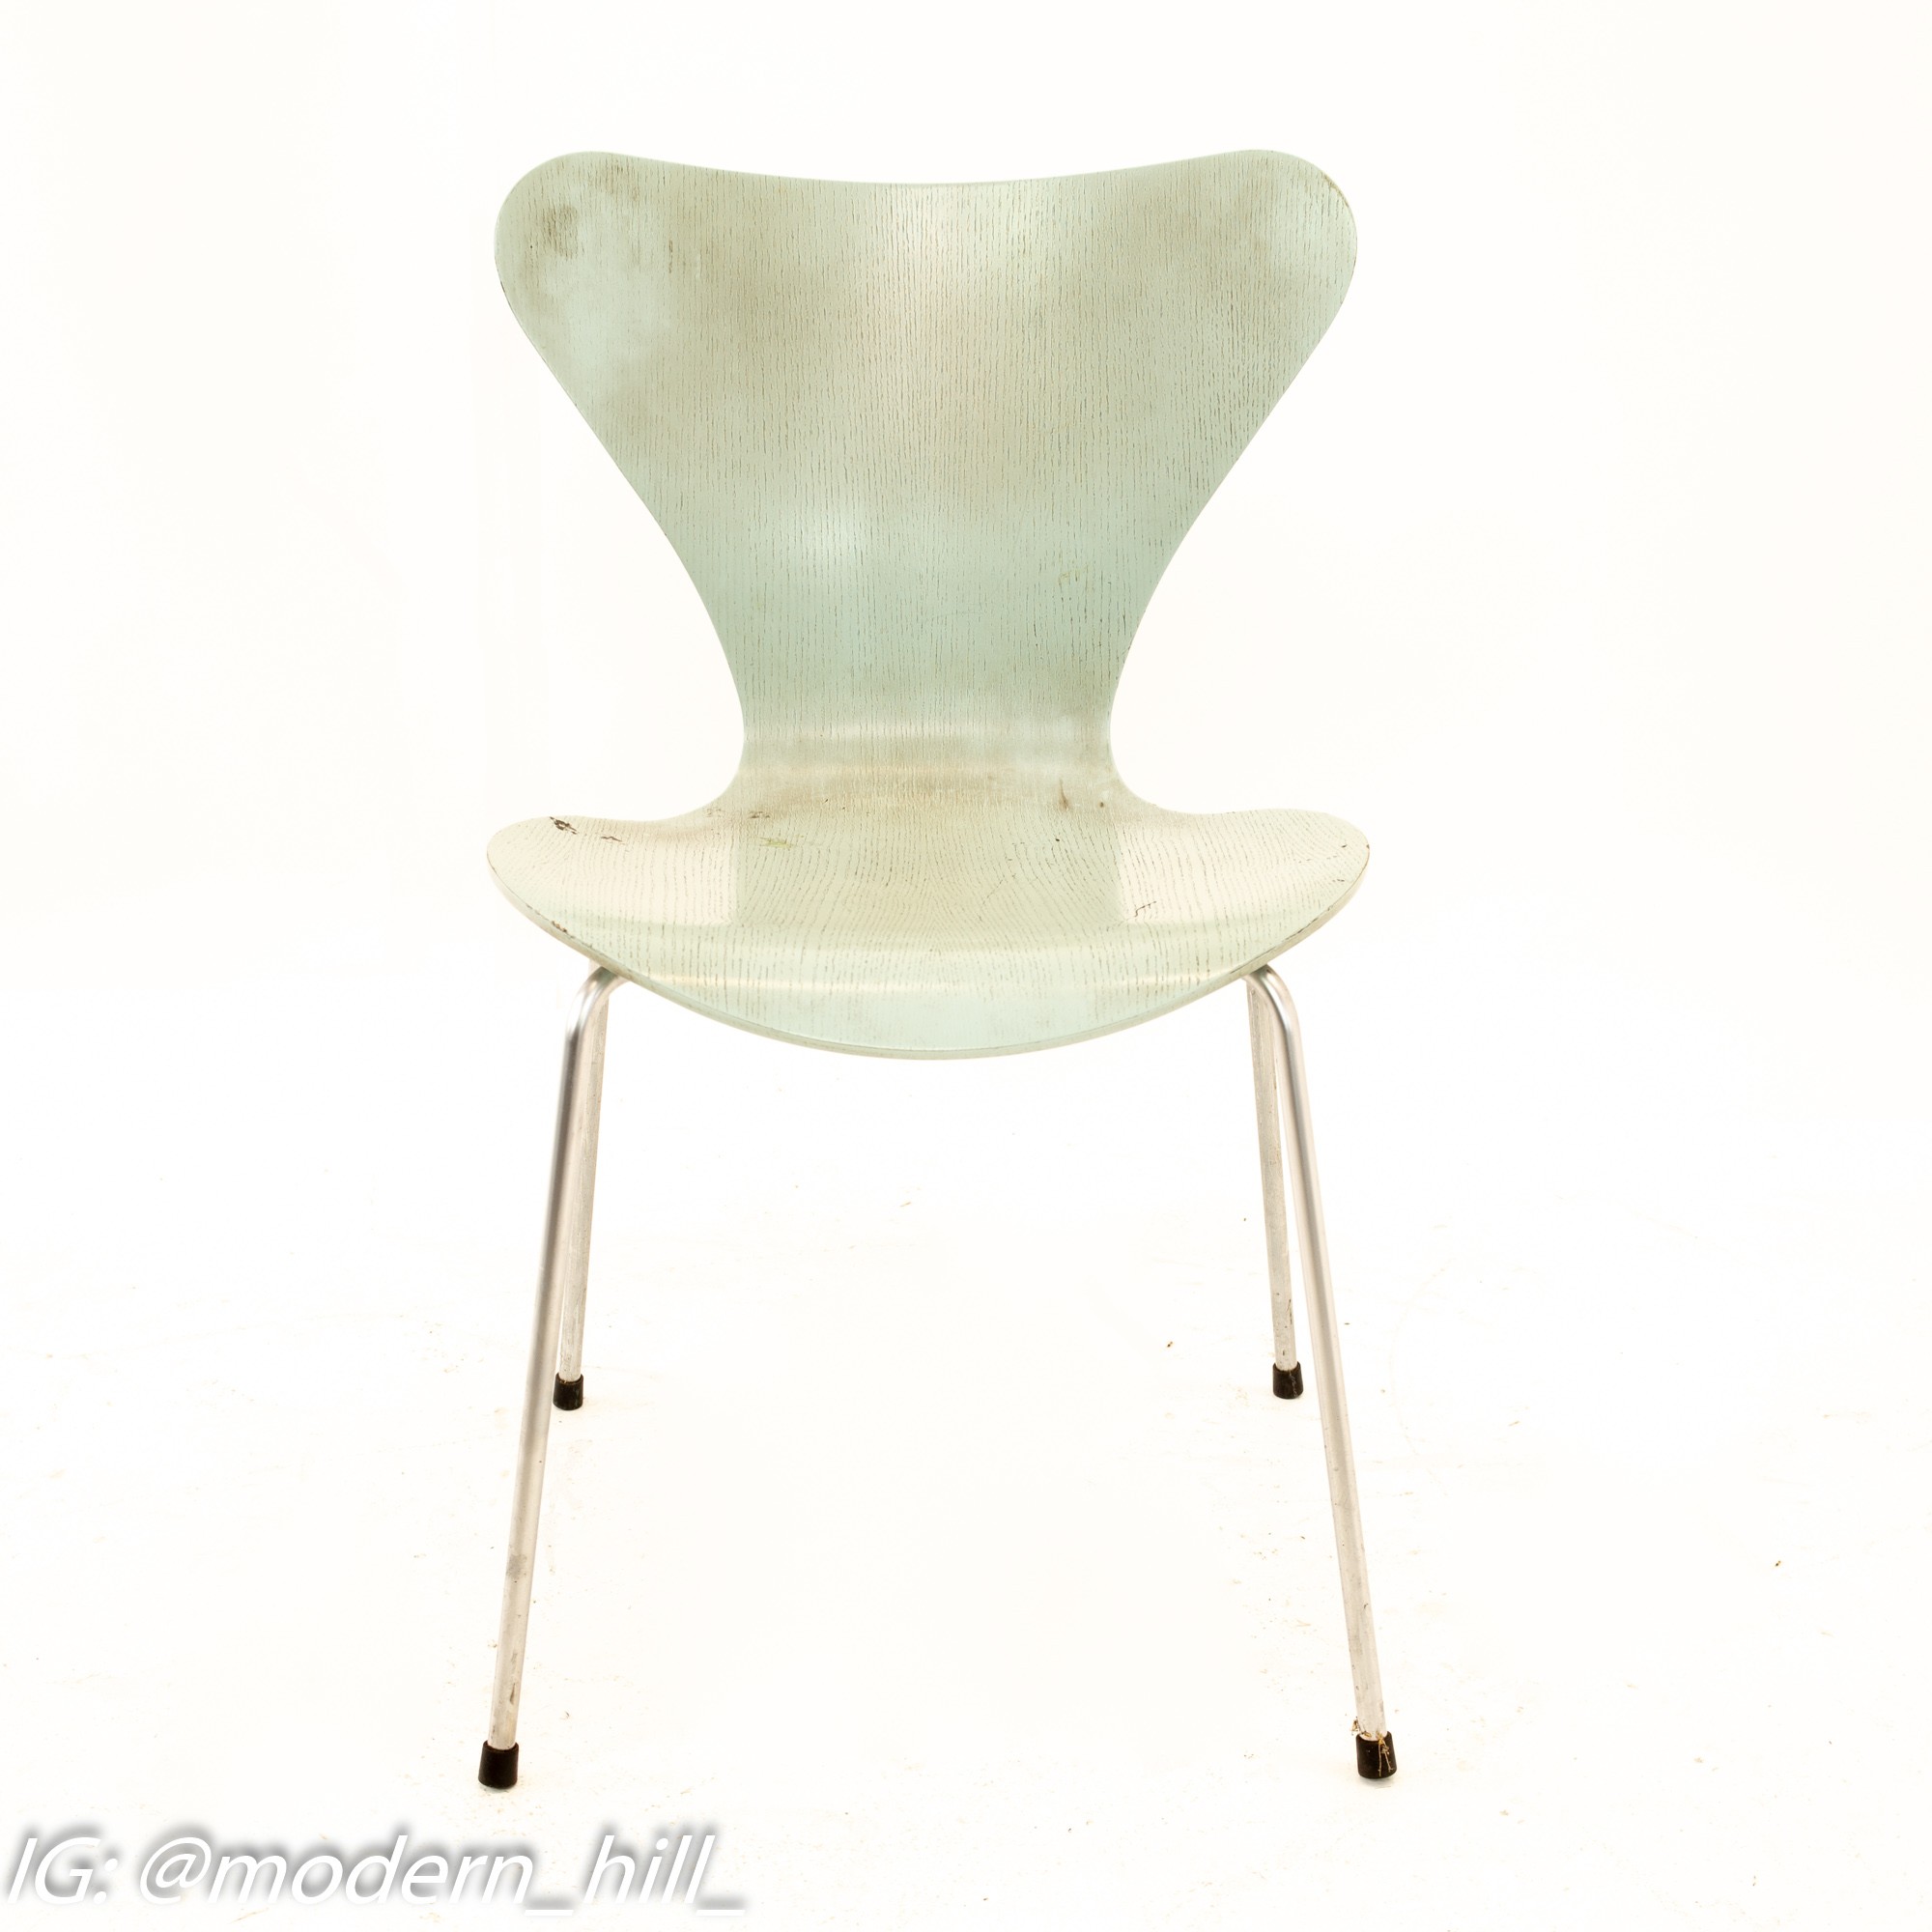 Arne Jacobsen for Fritz Hansen Mid Century Modern Series 7 Chair - Frost